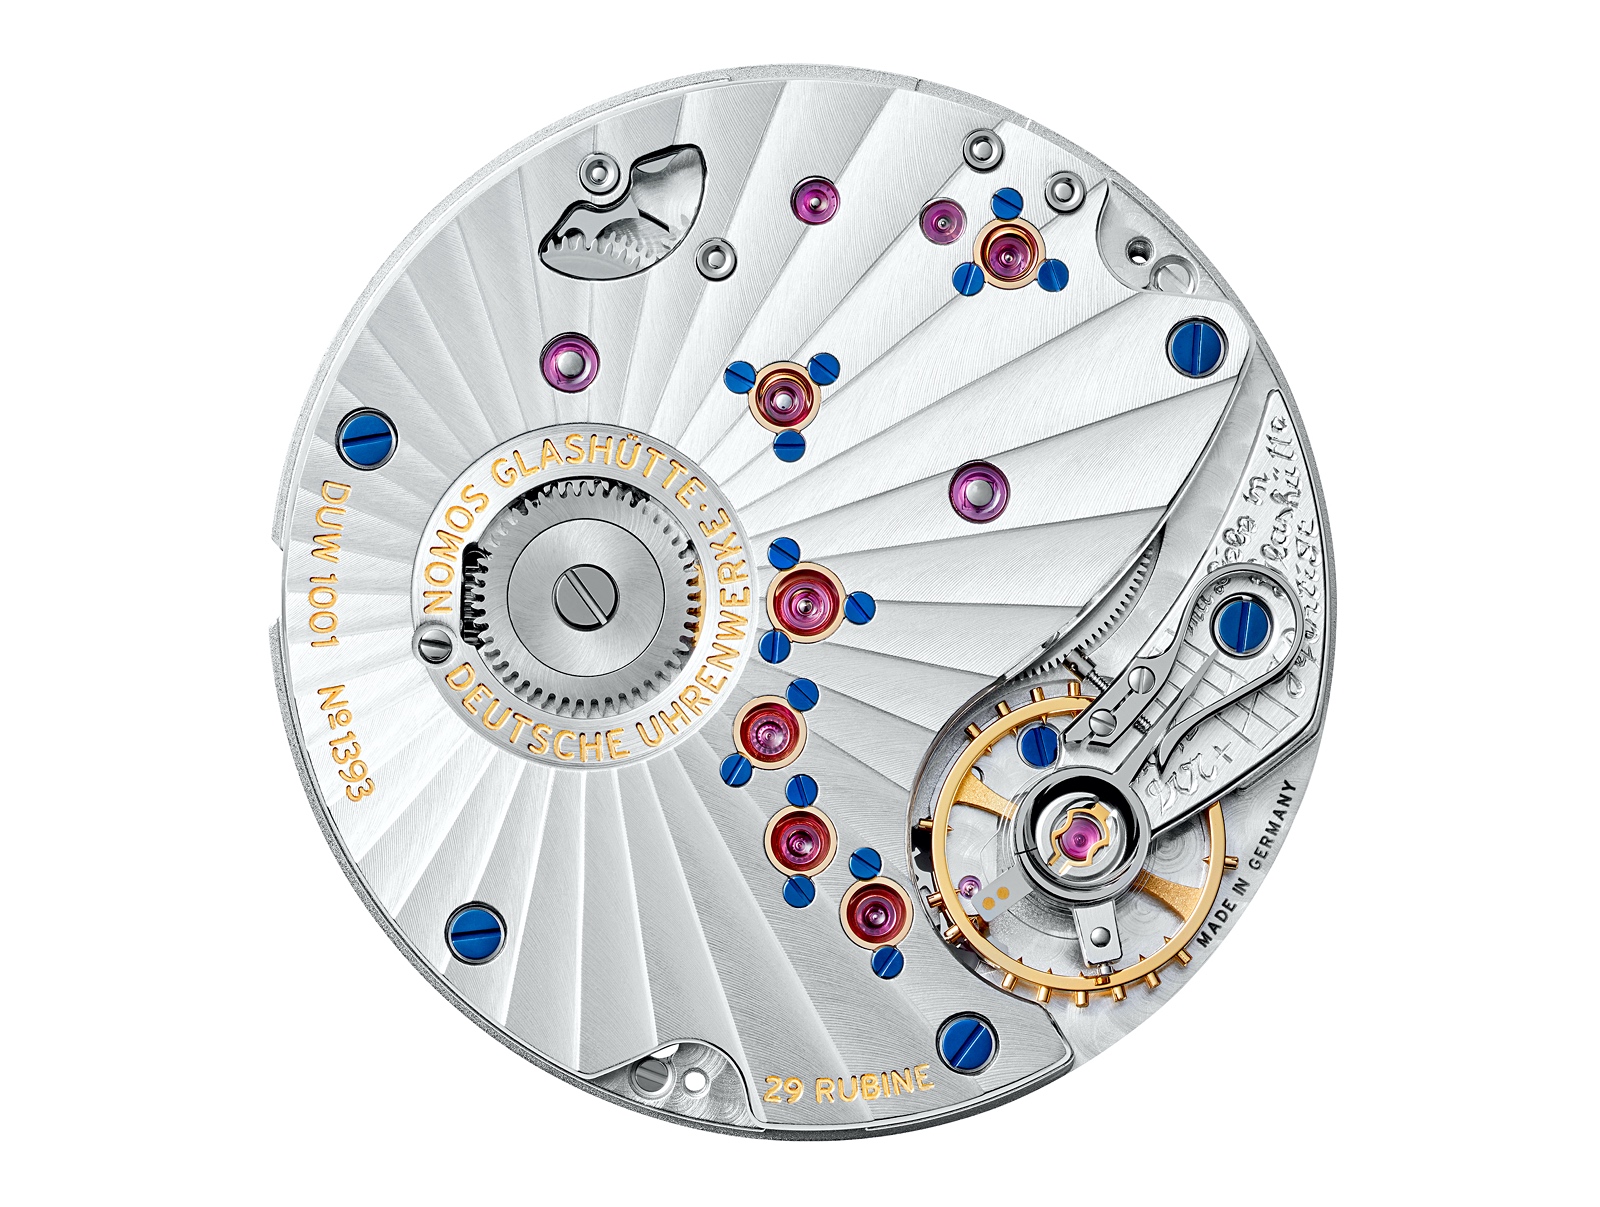 Nomos Lambda 175 years watchmaking - calibre DUW 1001